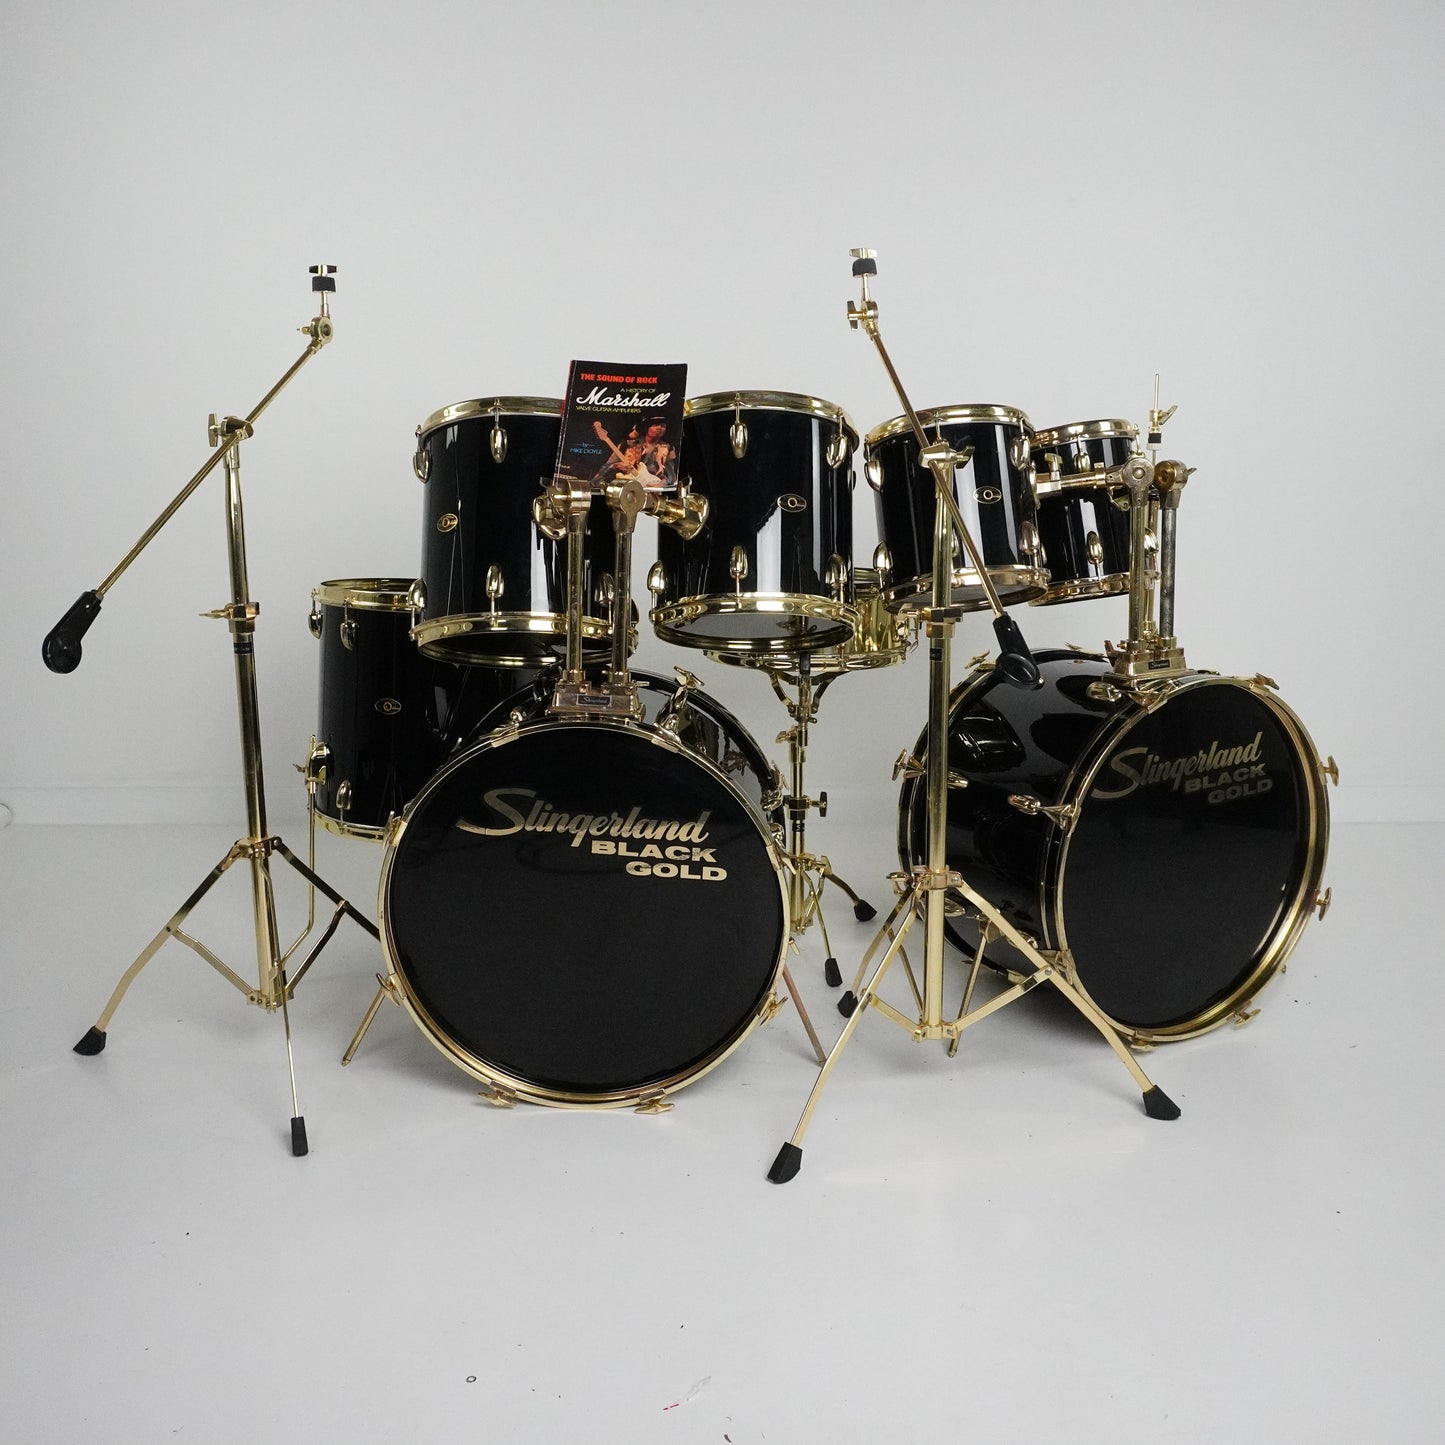 Jim Marshall’s 8-Piece Slingerland Drum Kit in Black and Gold